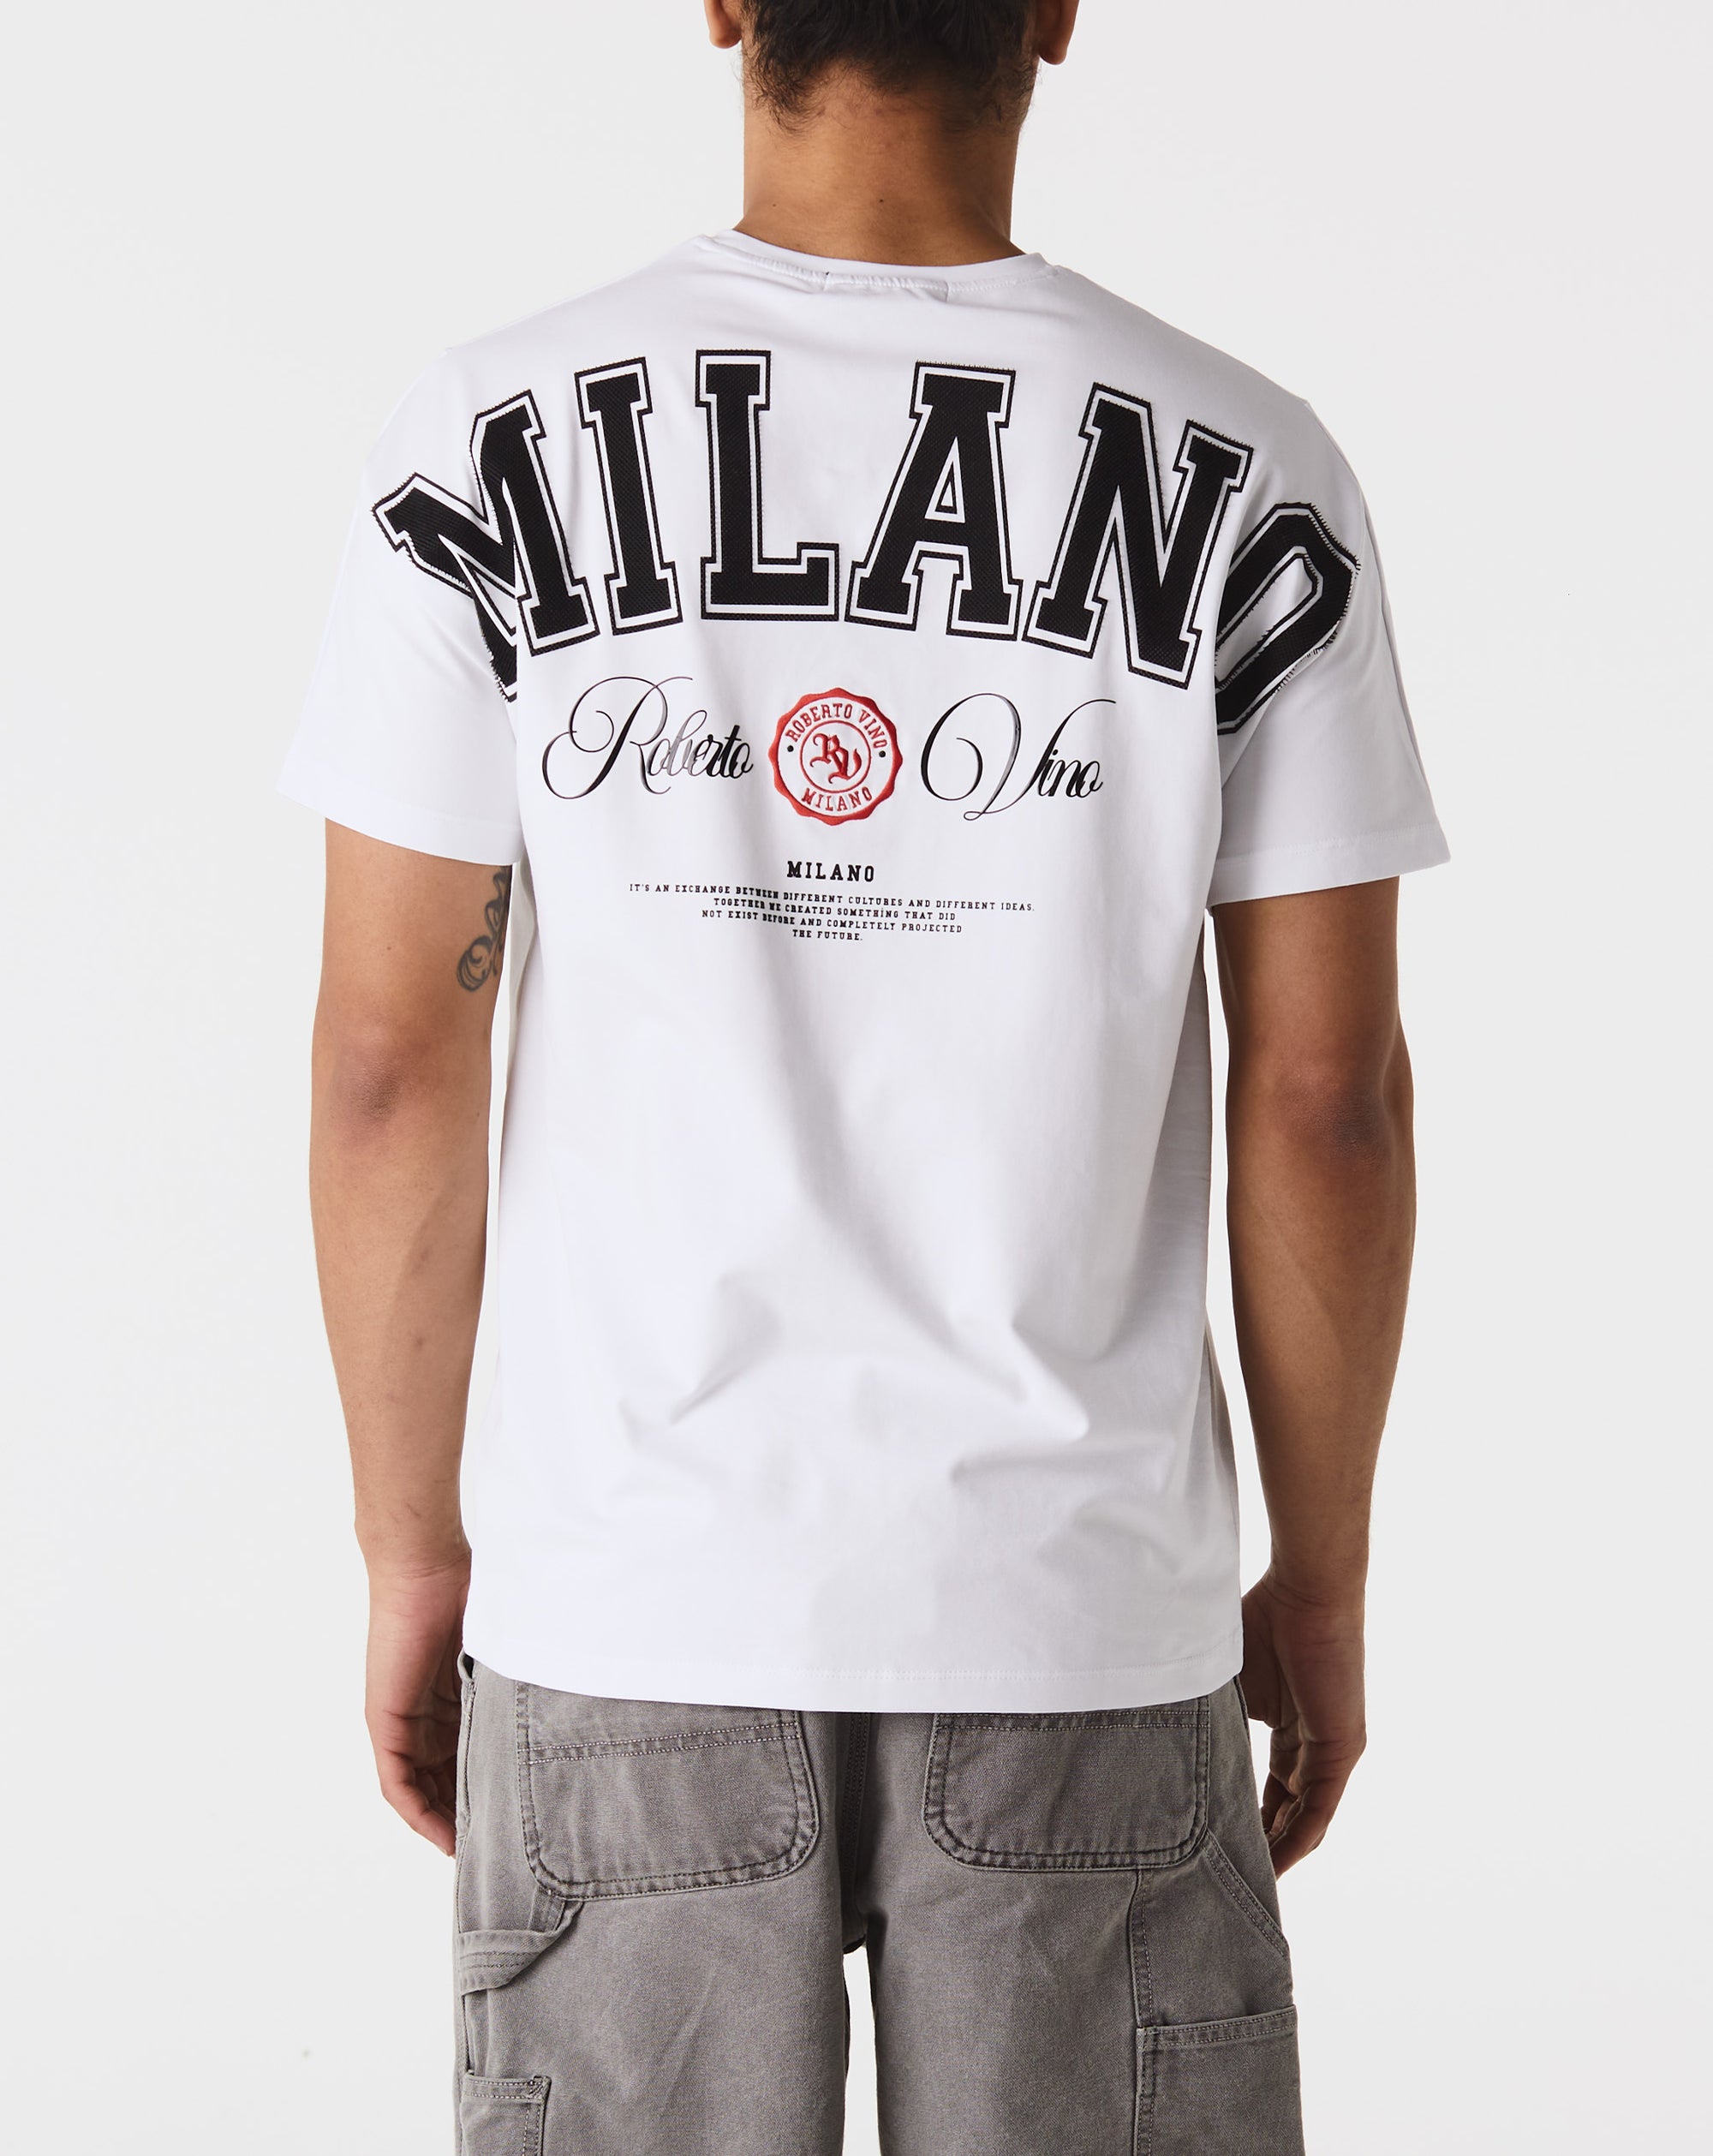 Roberto Vino Milano Milano T-Shirt - Rule of Next Apparel